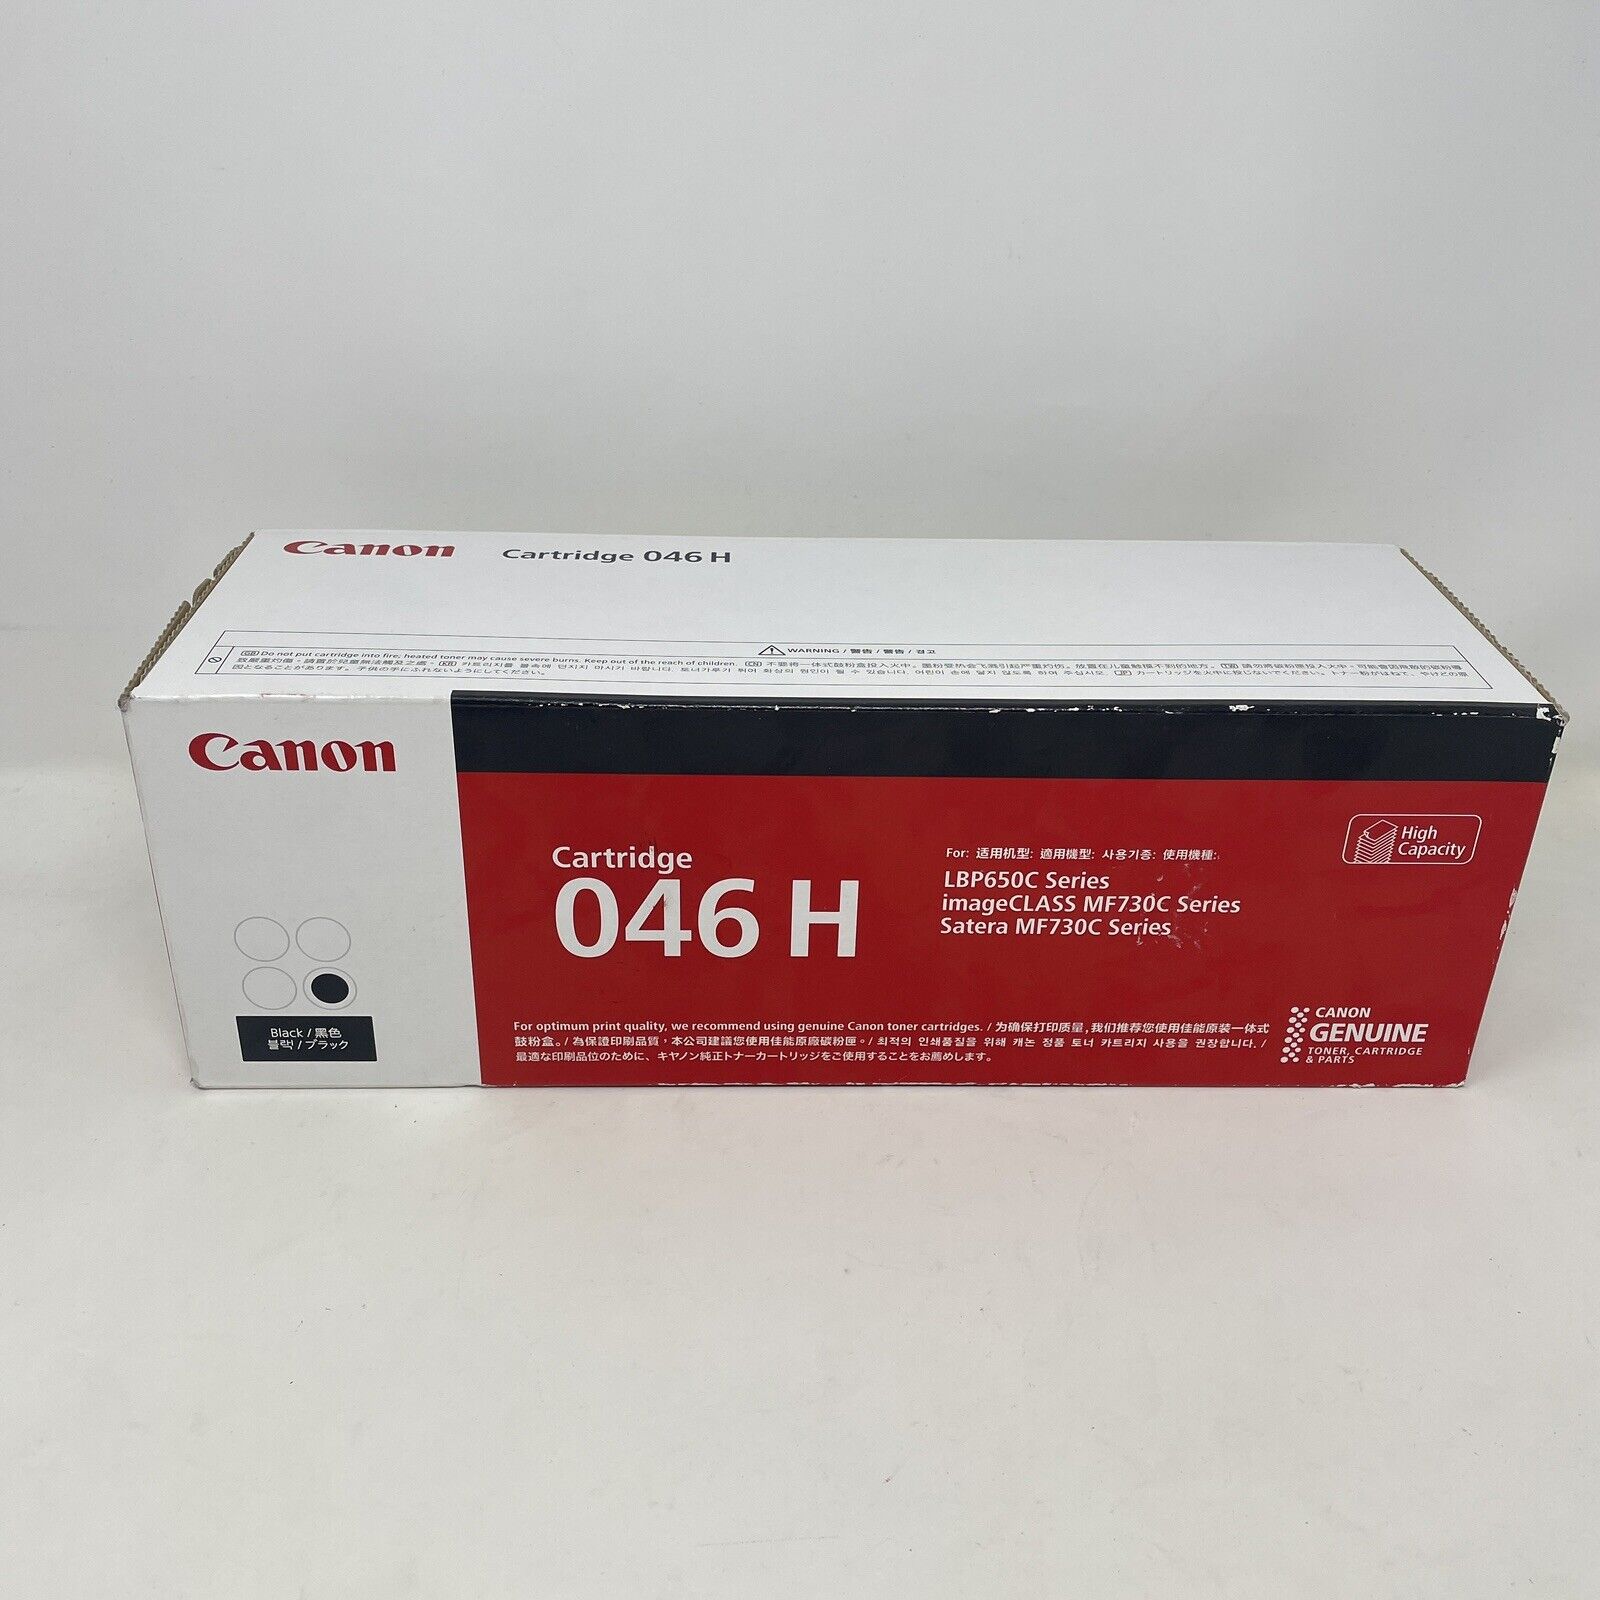 SEALED Genuine Canon 046H High Capacity Black Toner Cartridge 1254C003